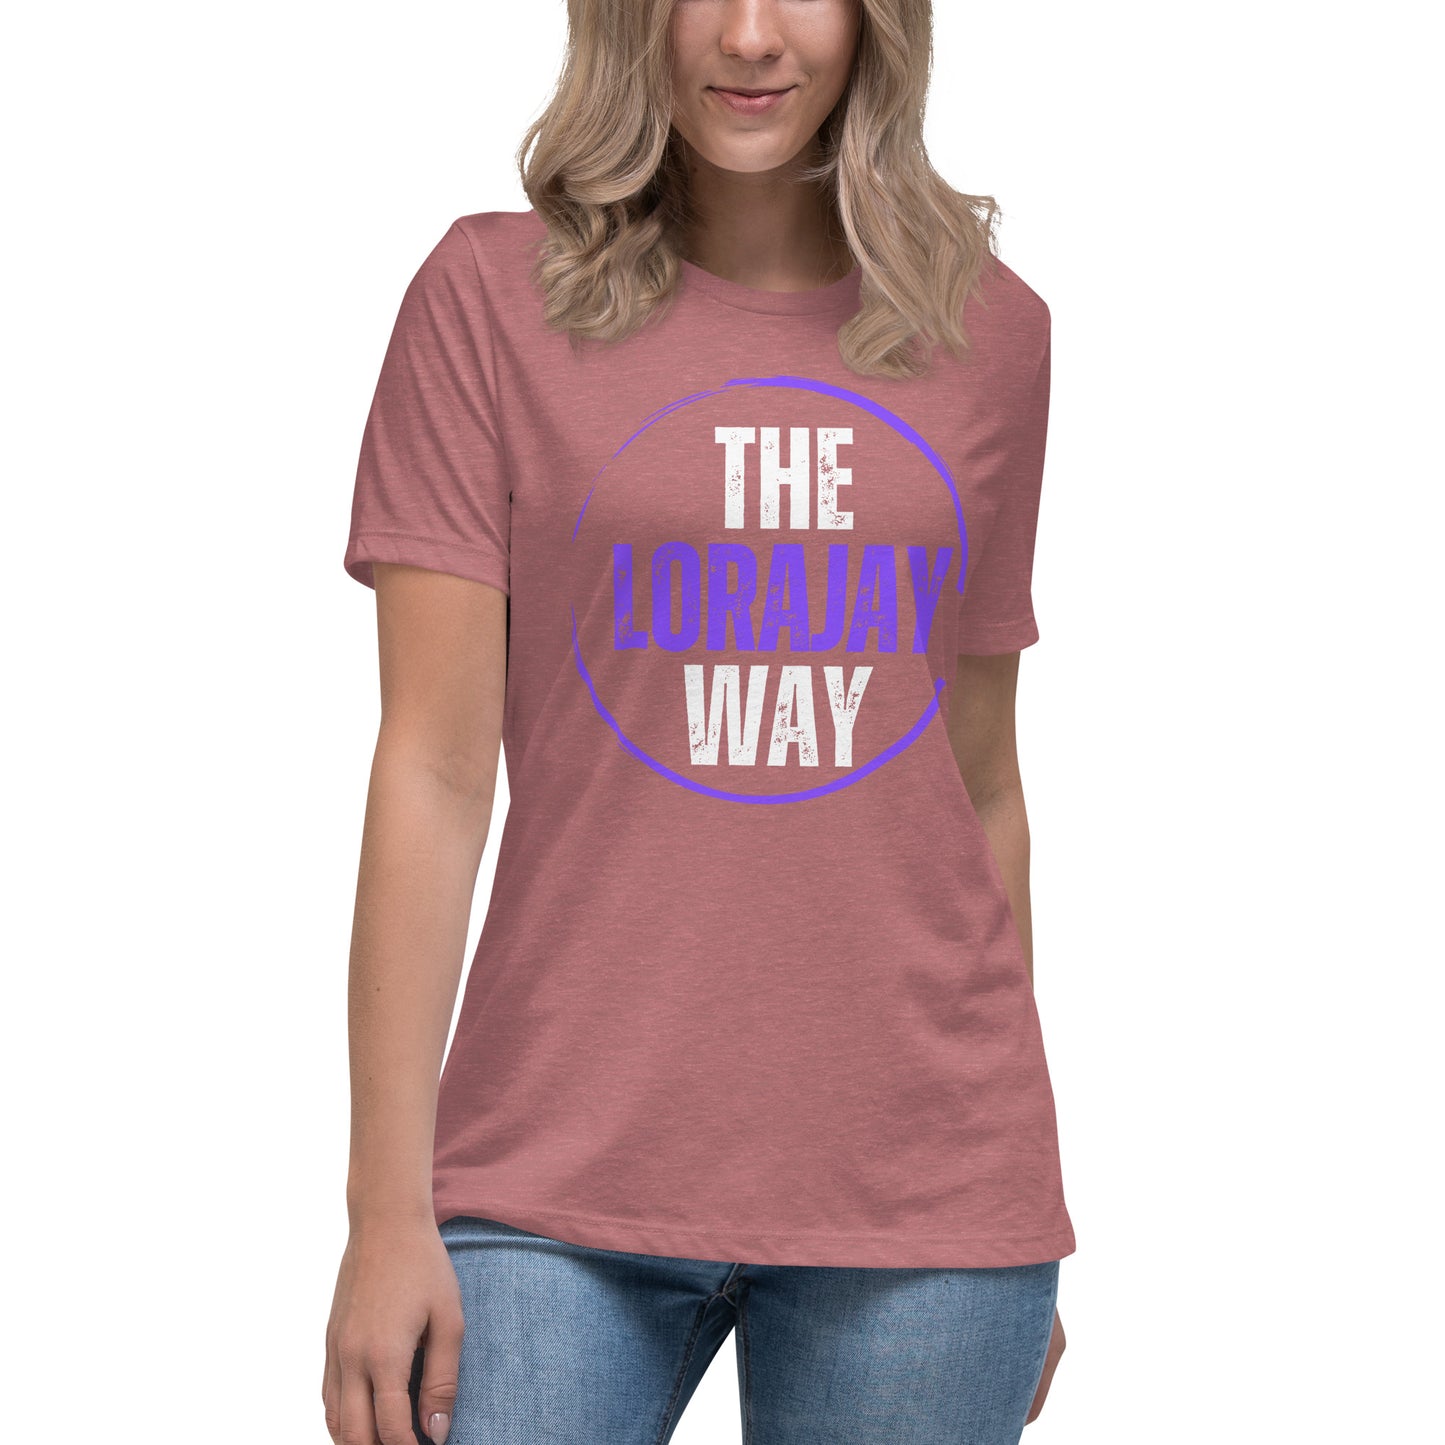 LoraJay Way Women's Relaxed T-Shirt